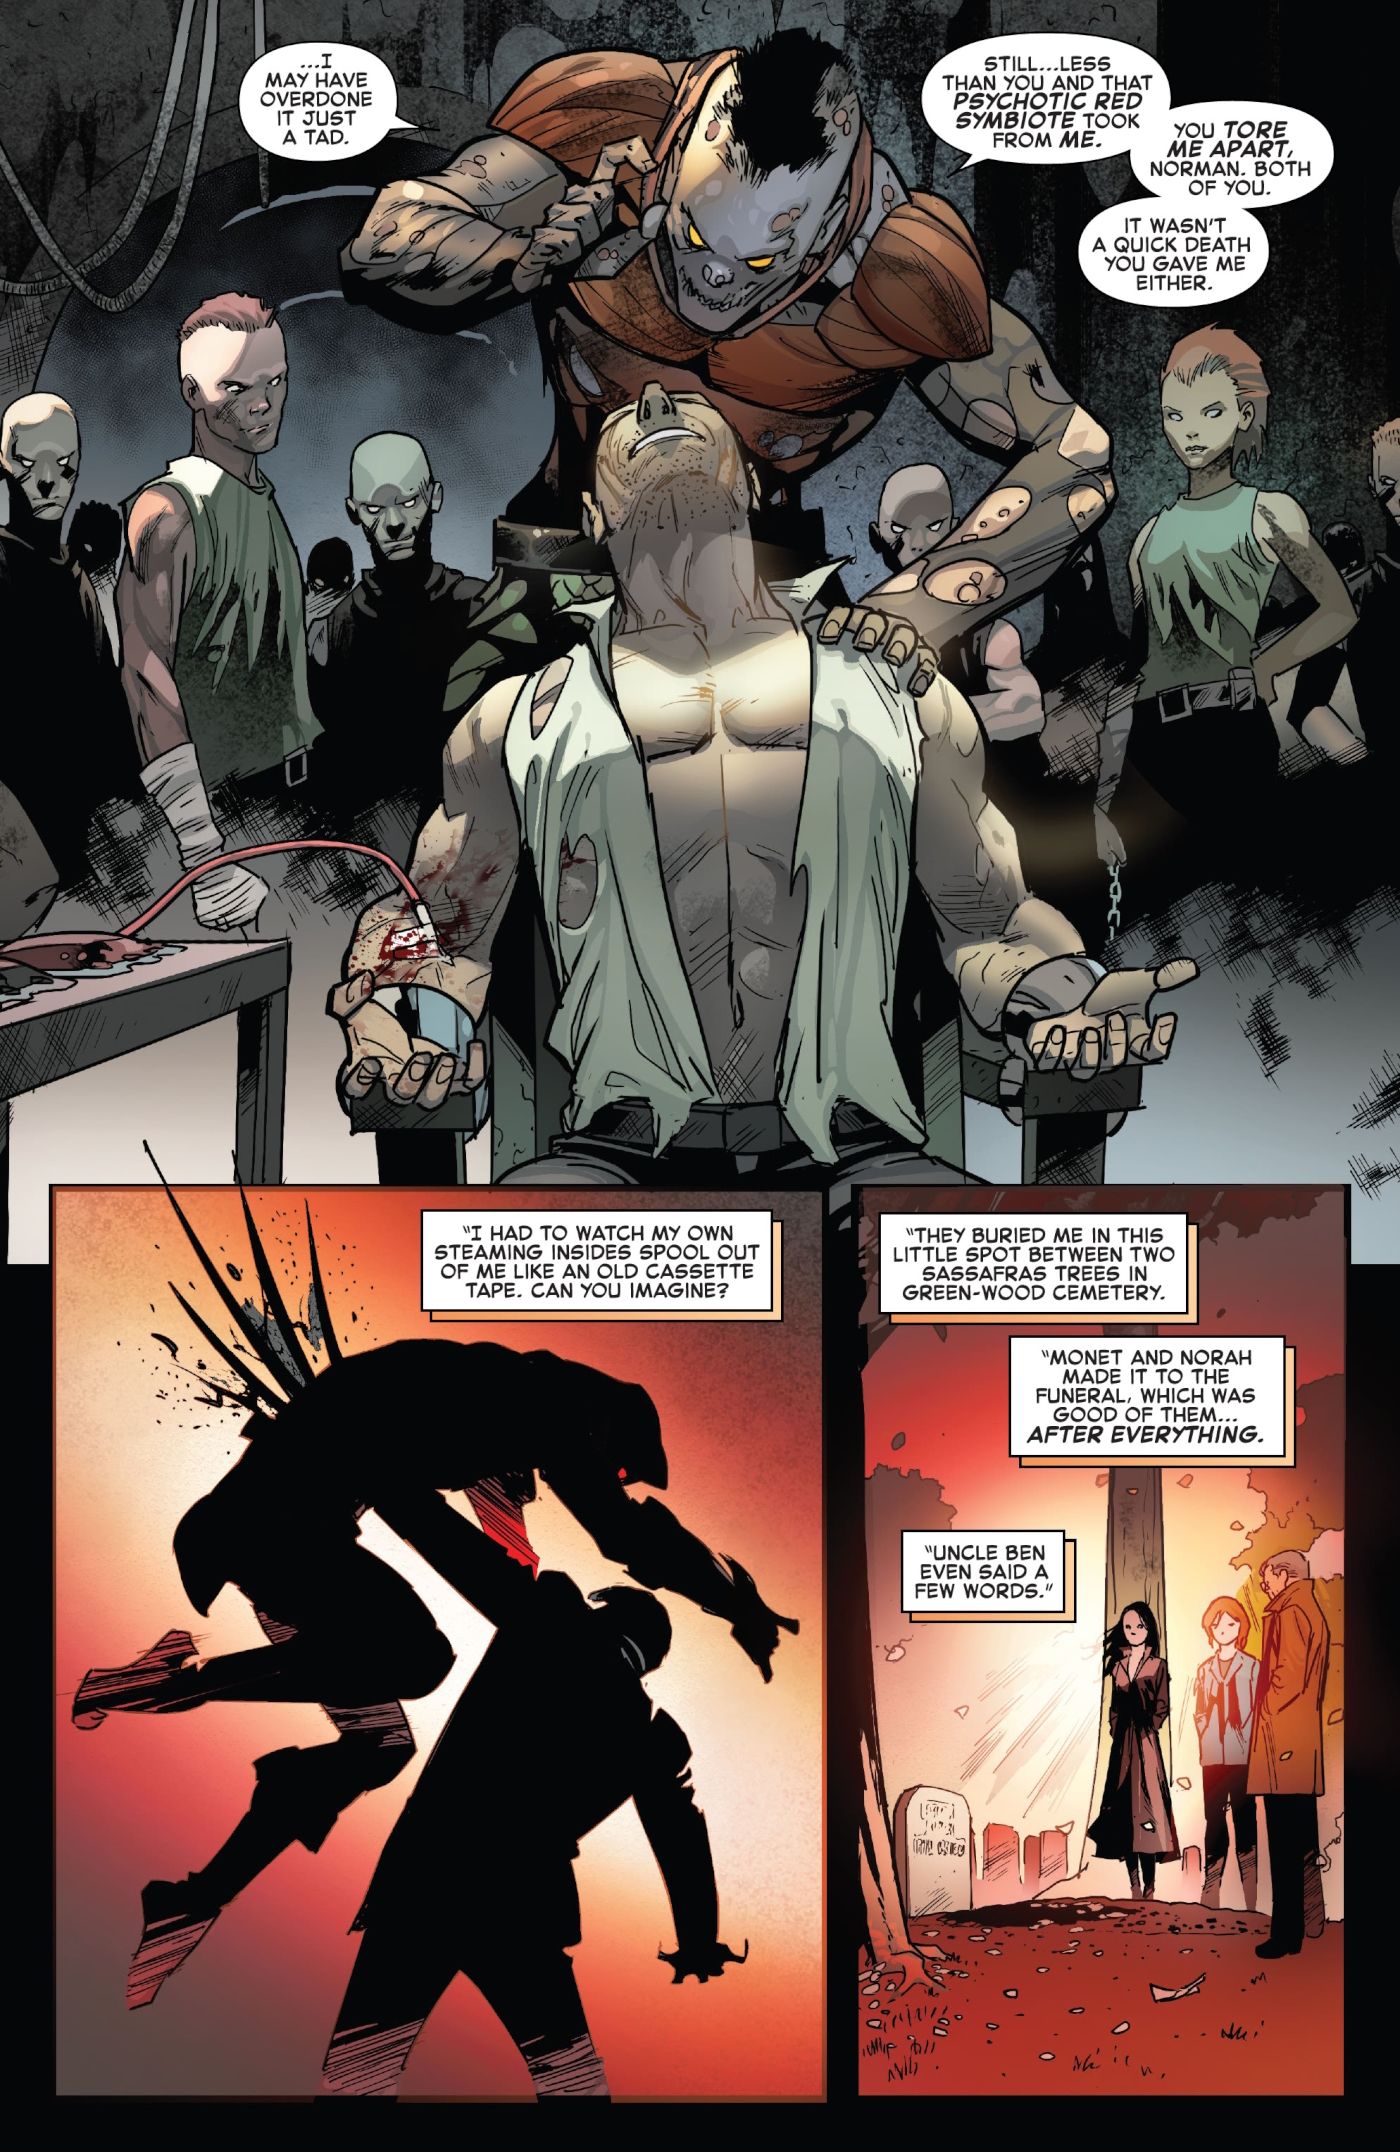 Amazing Spider-Man #797, Norman Osborn kills Phil Urich